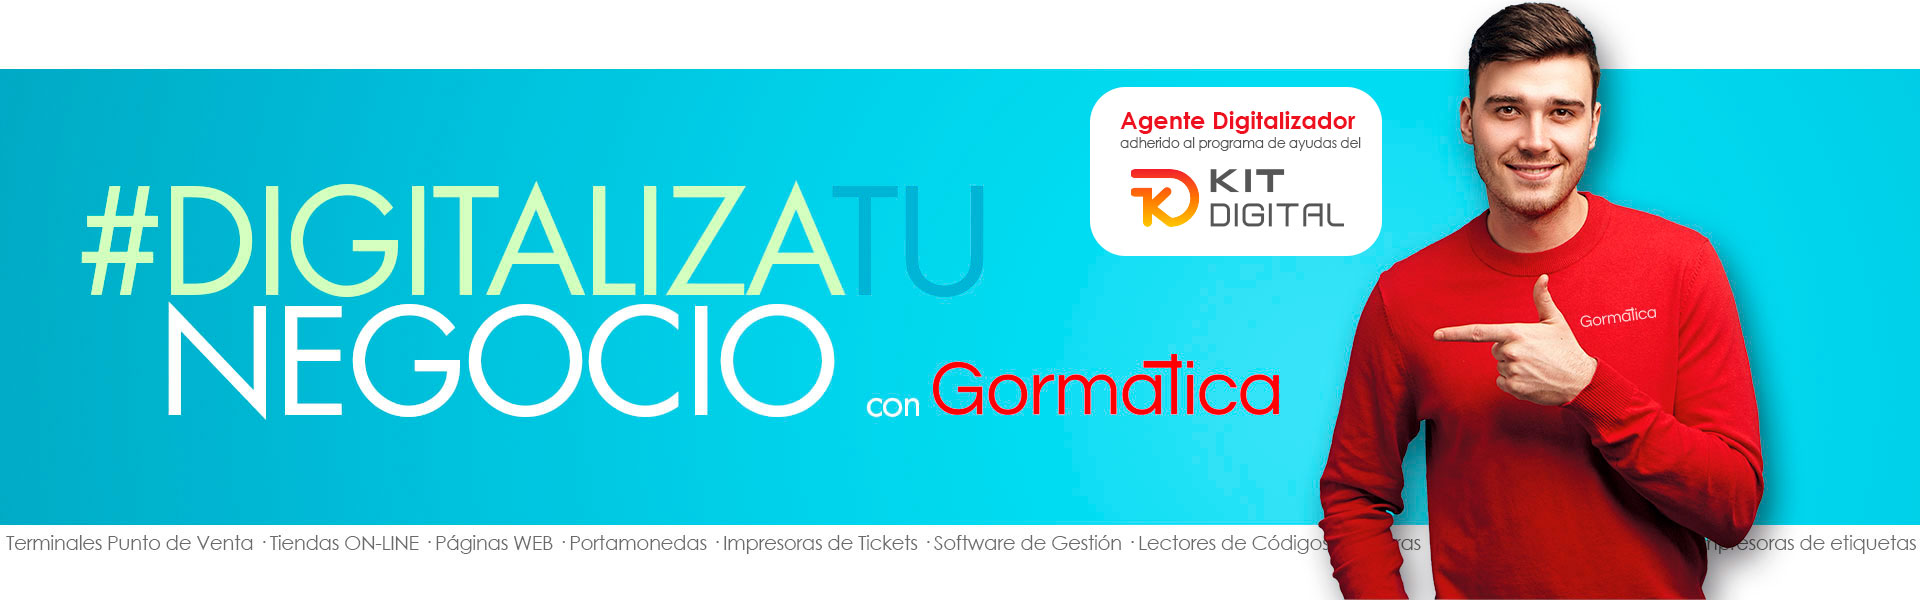 Plan Acelera Pyme - Kit Digital - Agente digitalizador en Soria